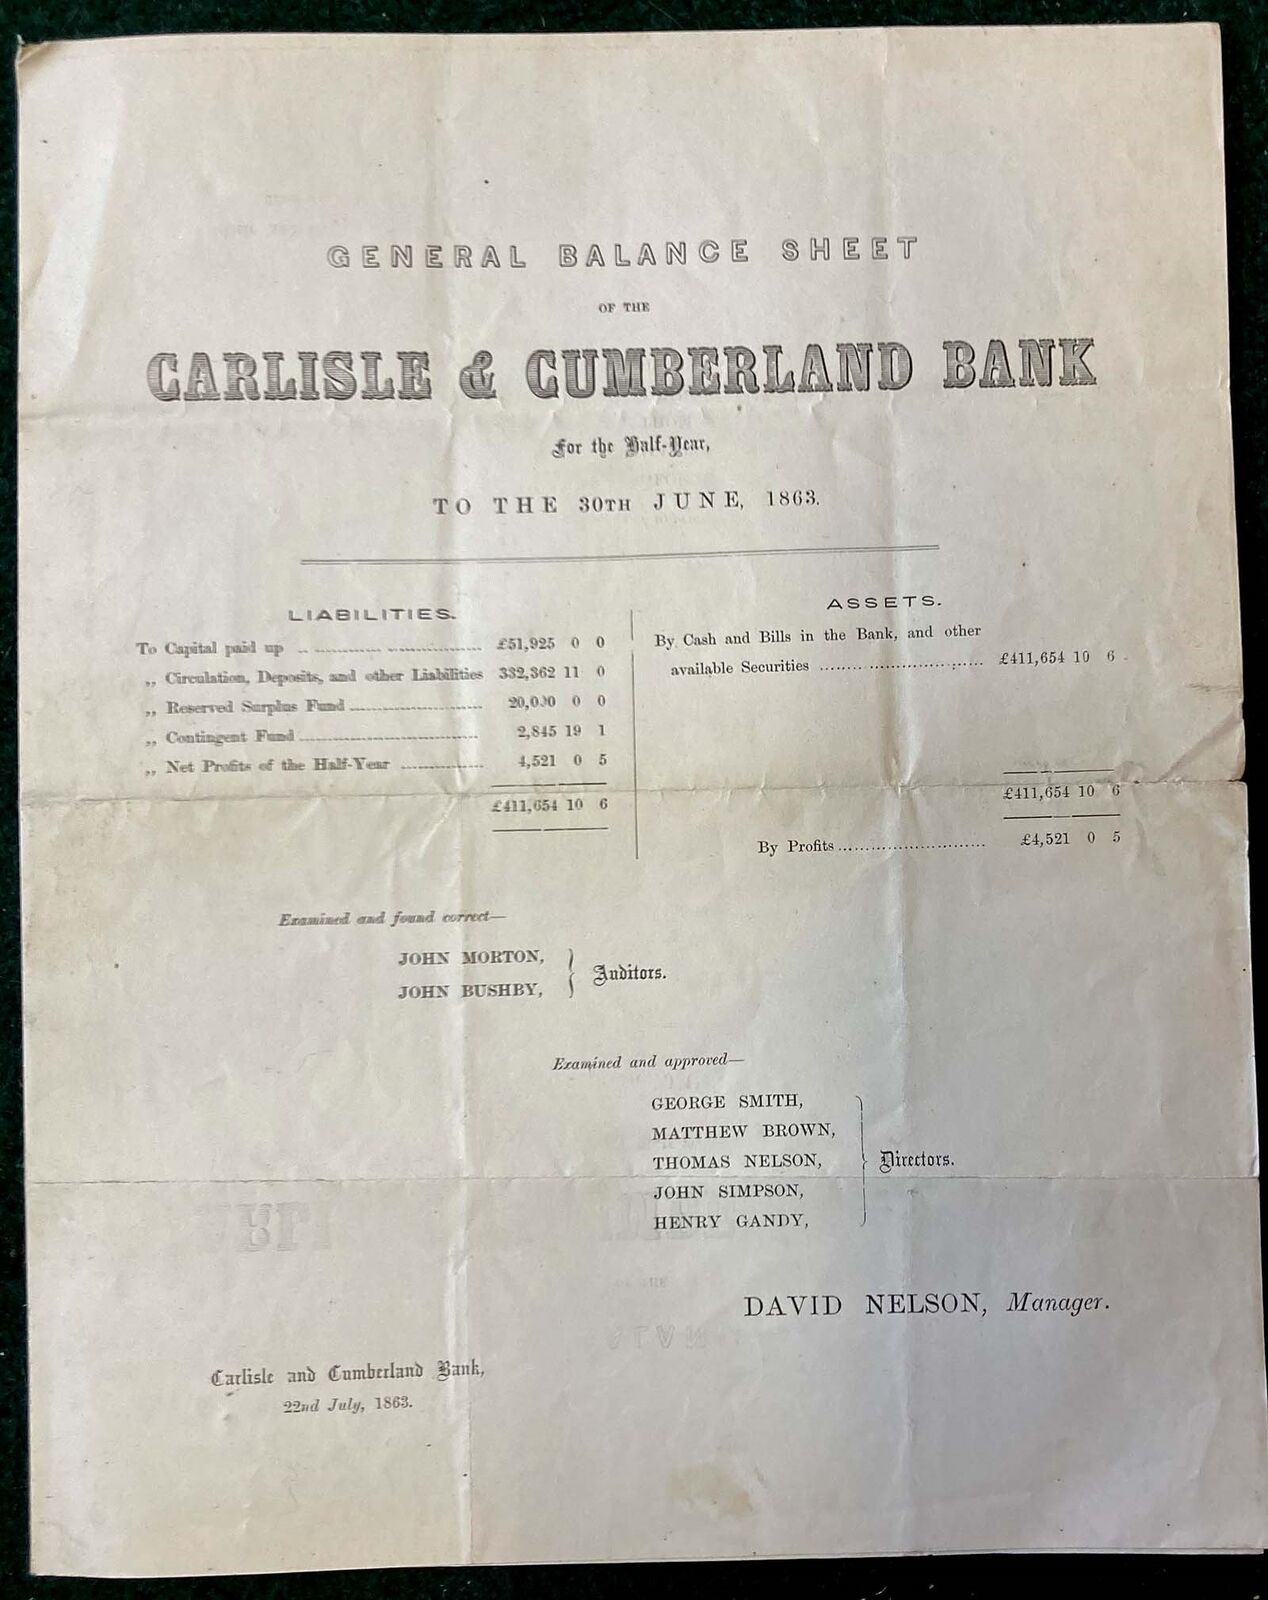 1863 CARLISLE & CUMBERLAND BANK, General half year balance sheet